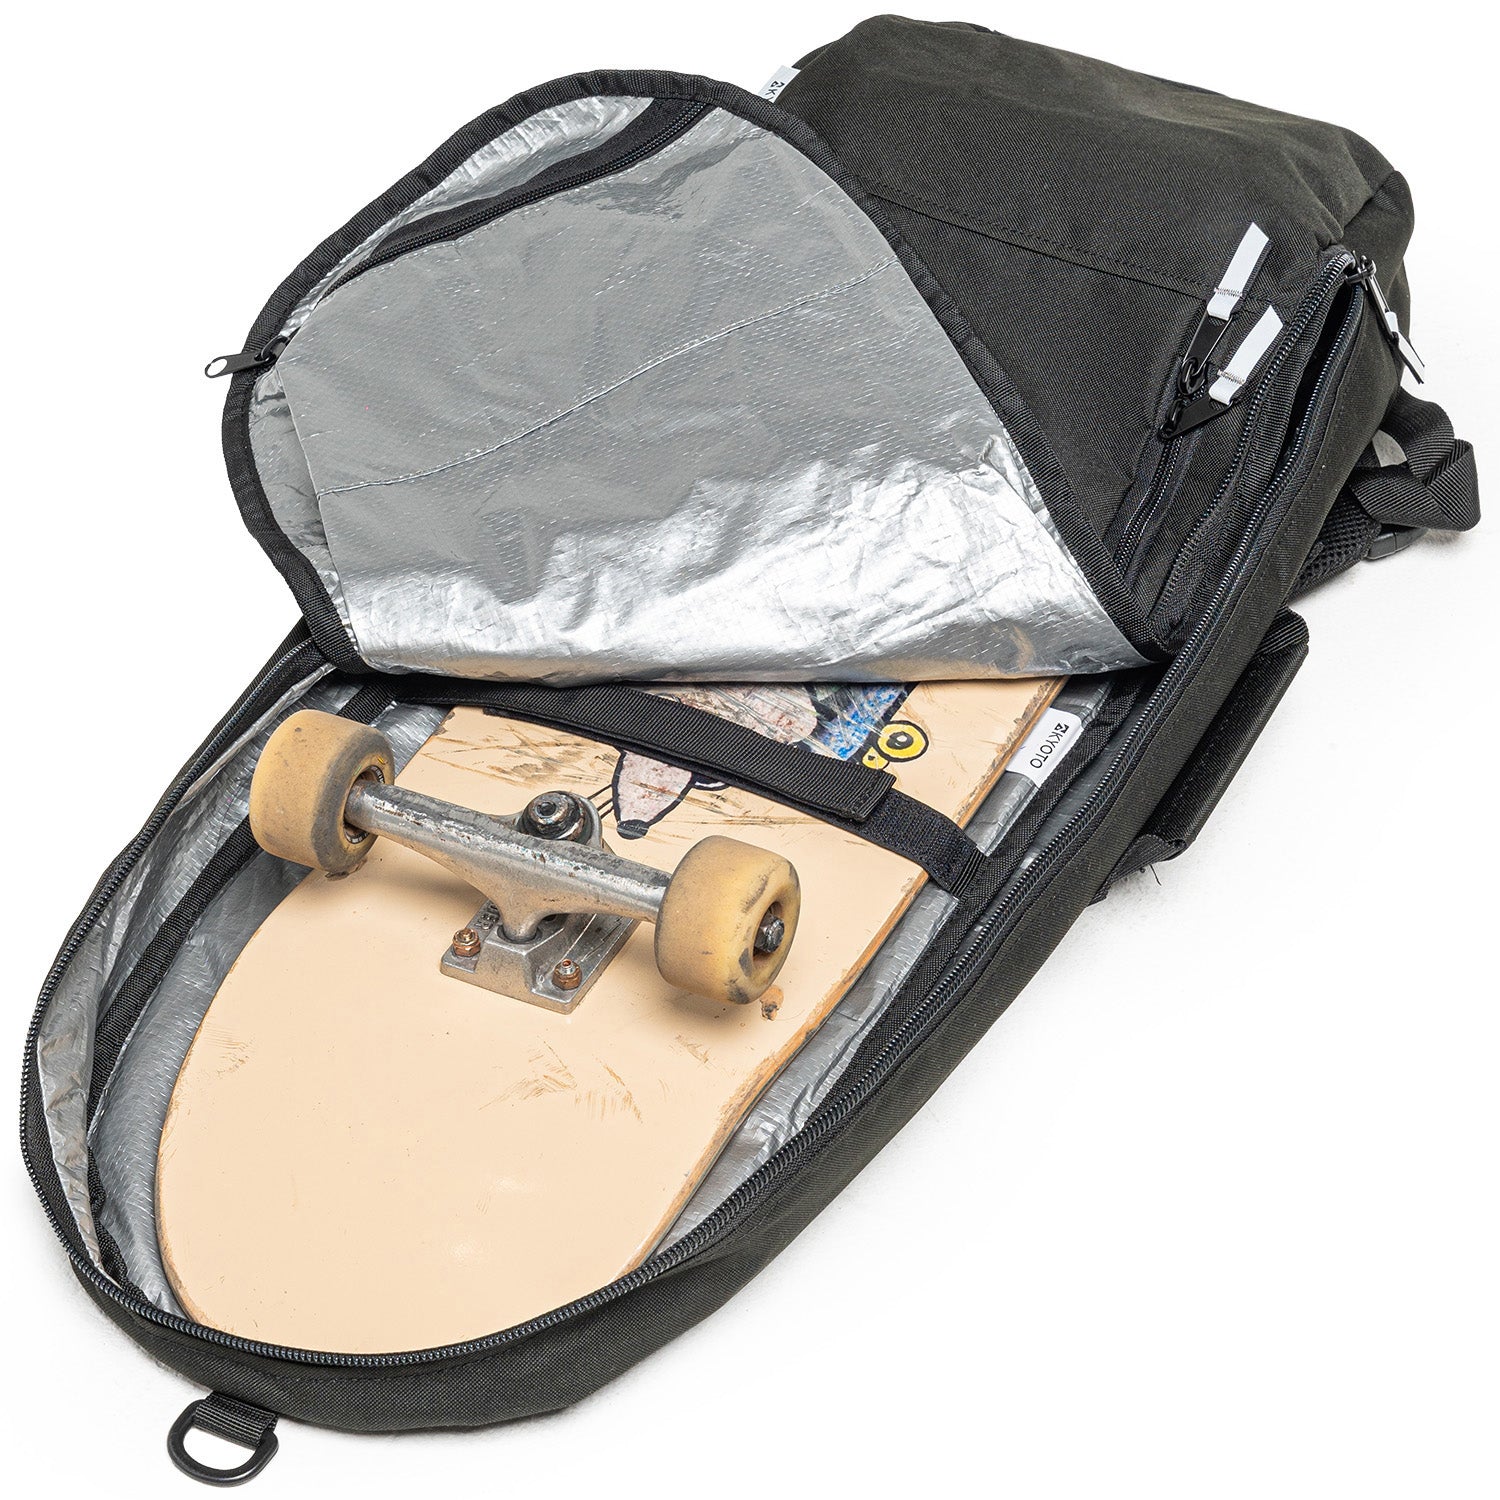 Travelon Anti-Theft Urban® Tour Bag- Slate - Just Bags Luggage Center